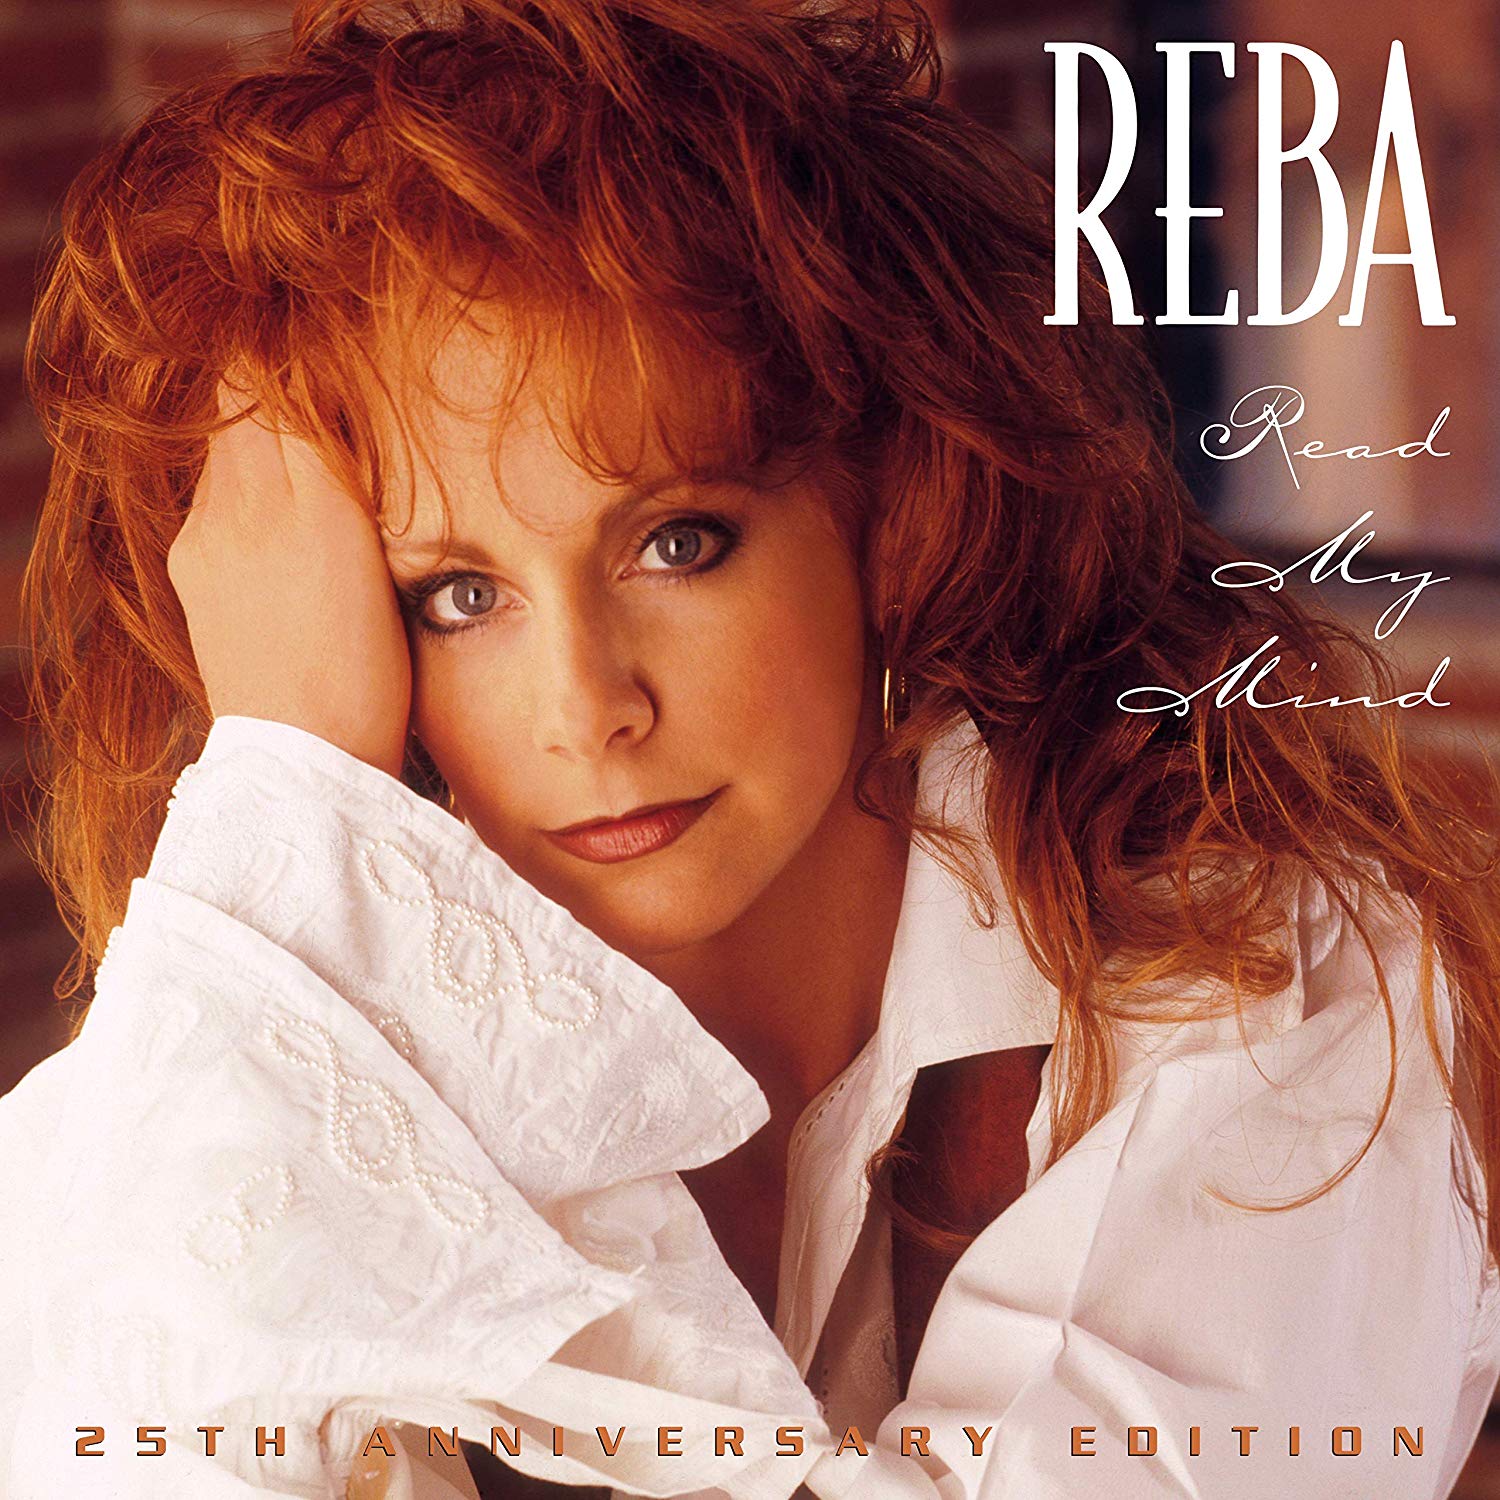 Reba McEntire - Read My Mind [White Vinyl]